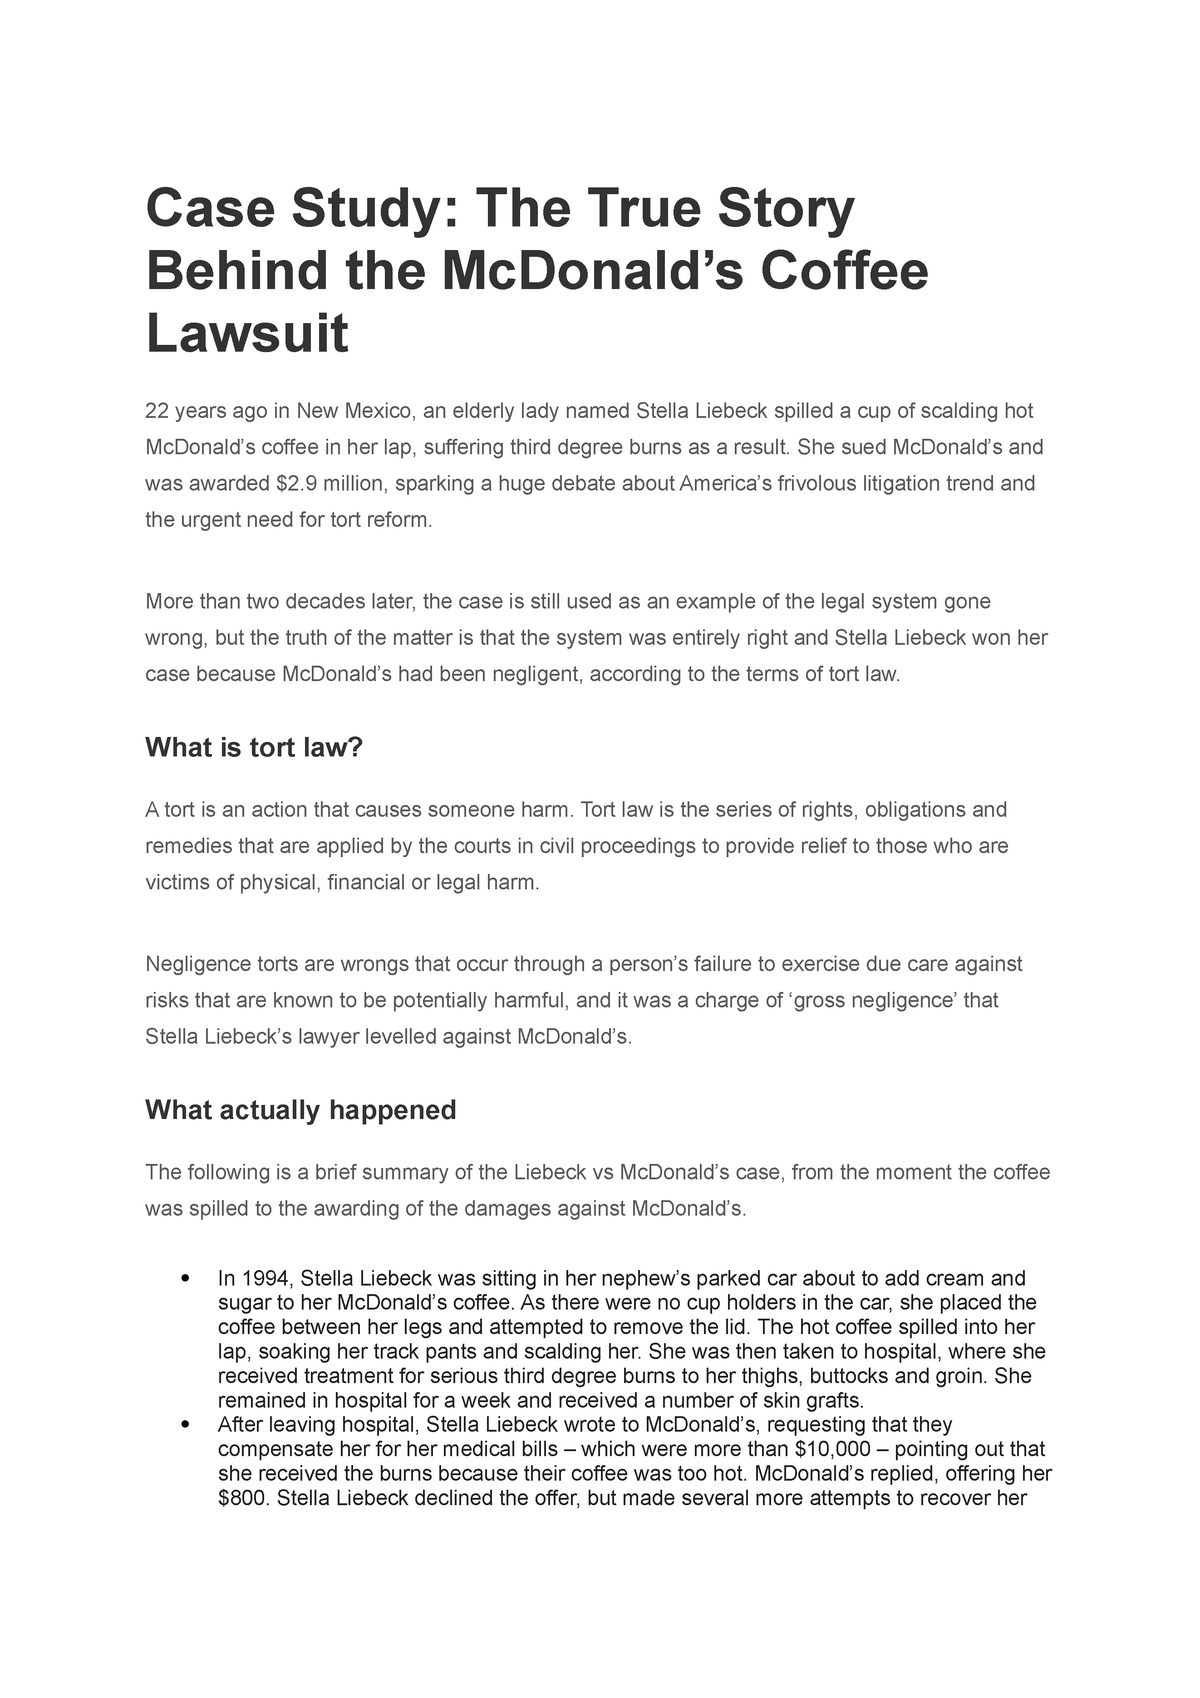 mcdonald's coffee case study